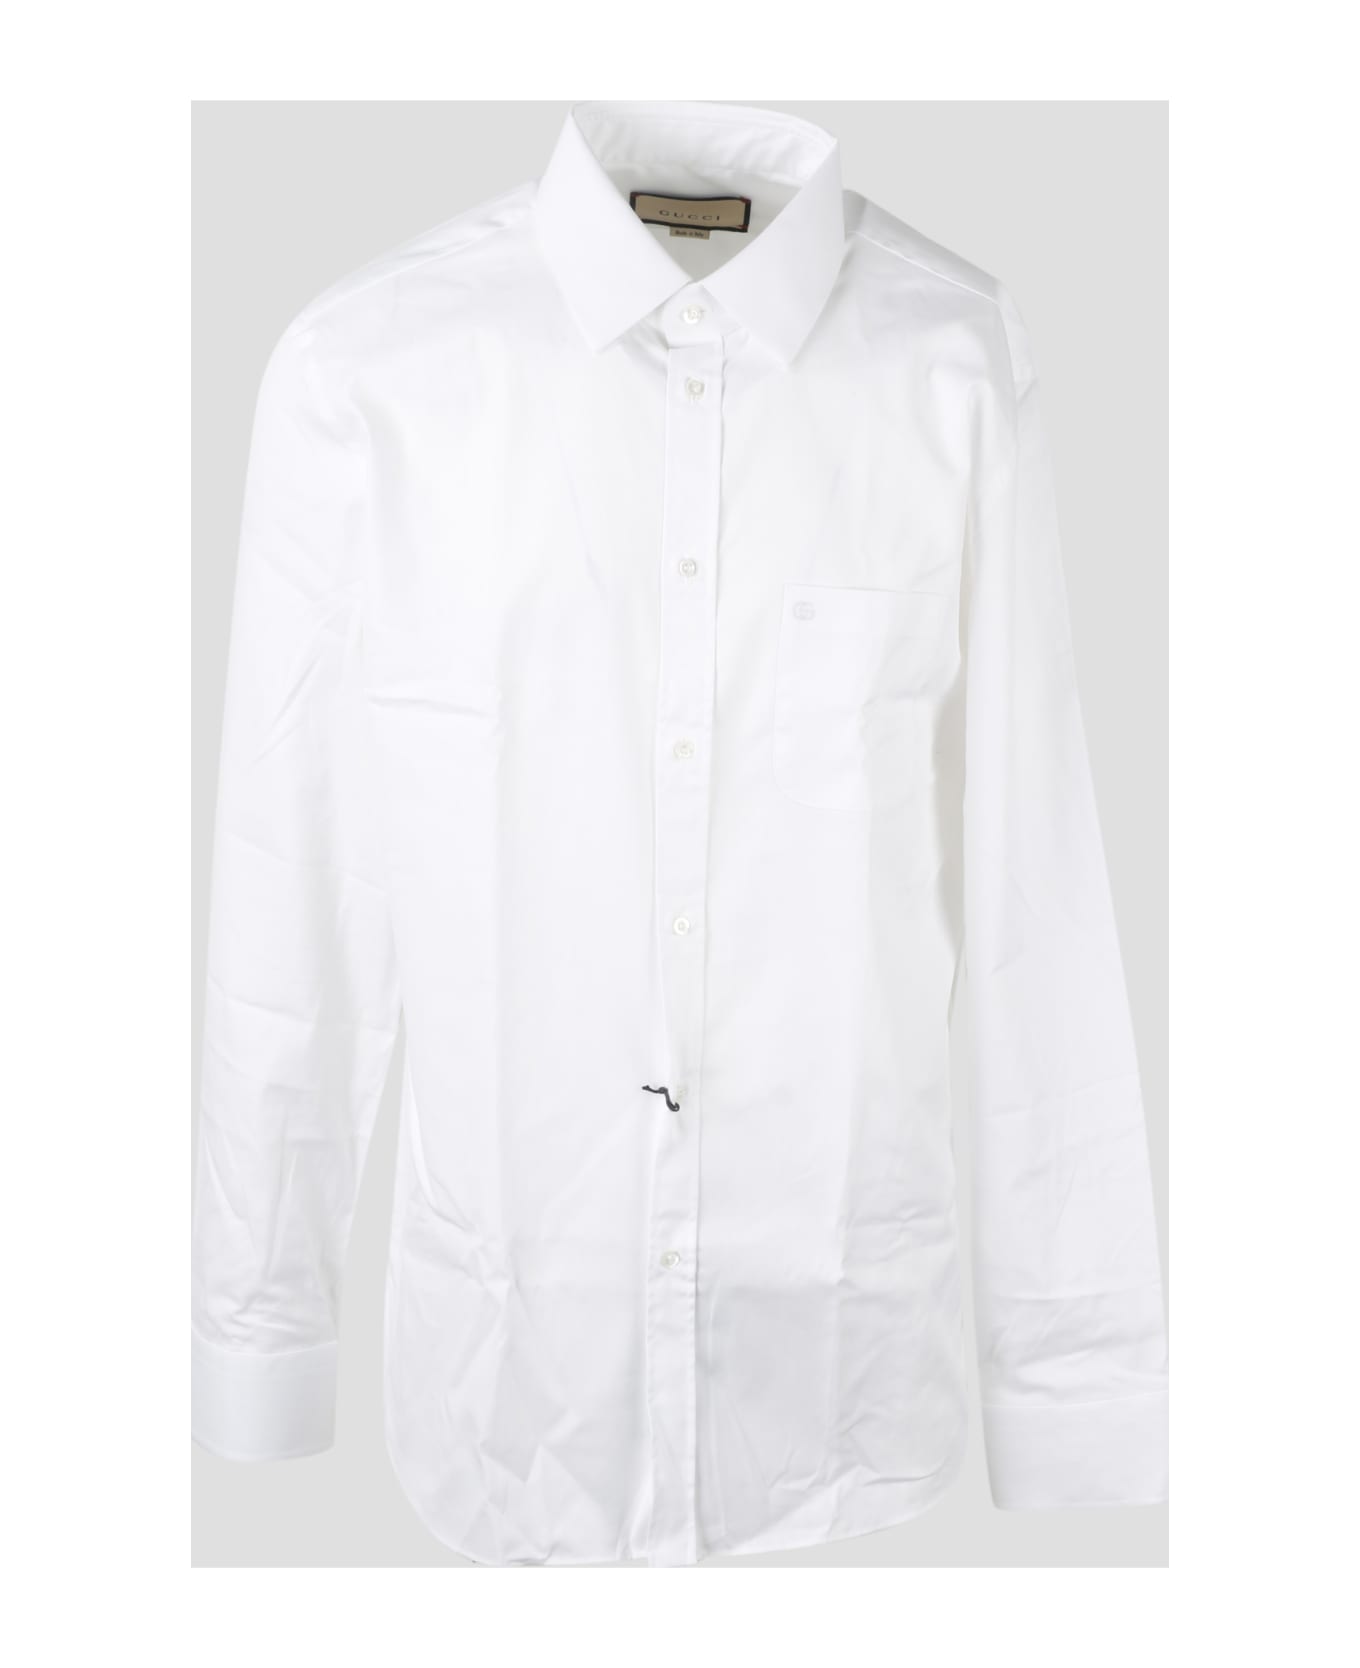 Gucci Tailored Shirt - White